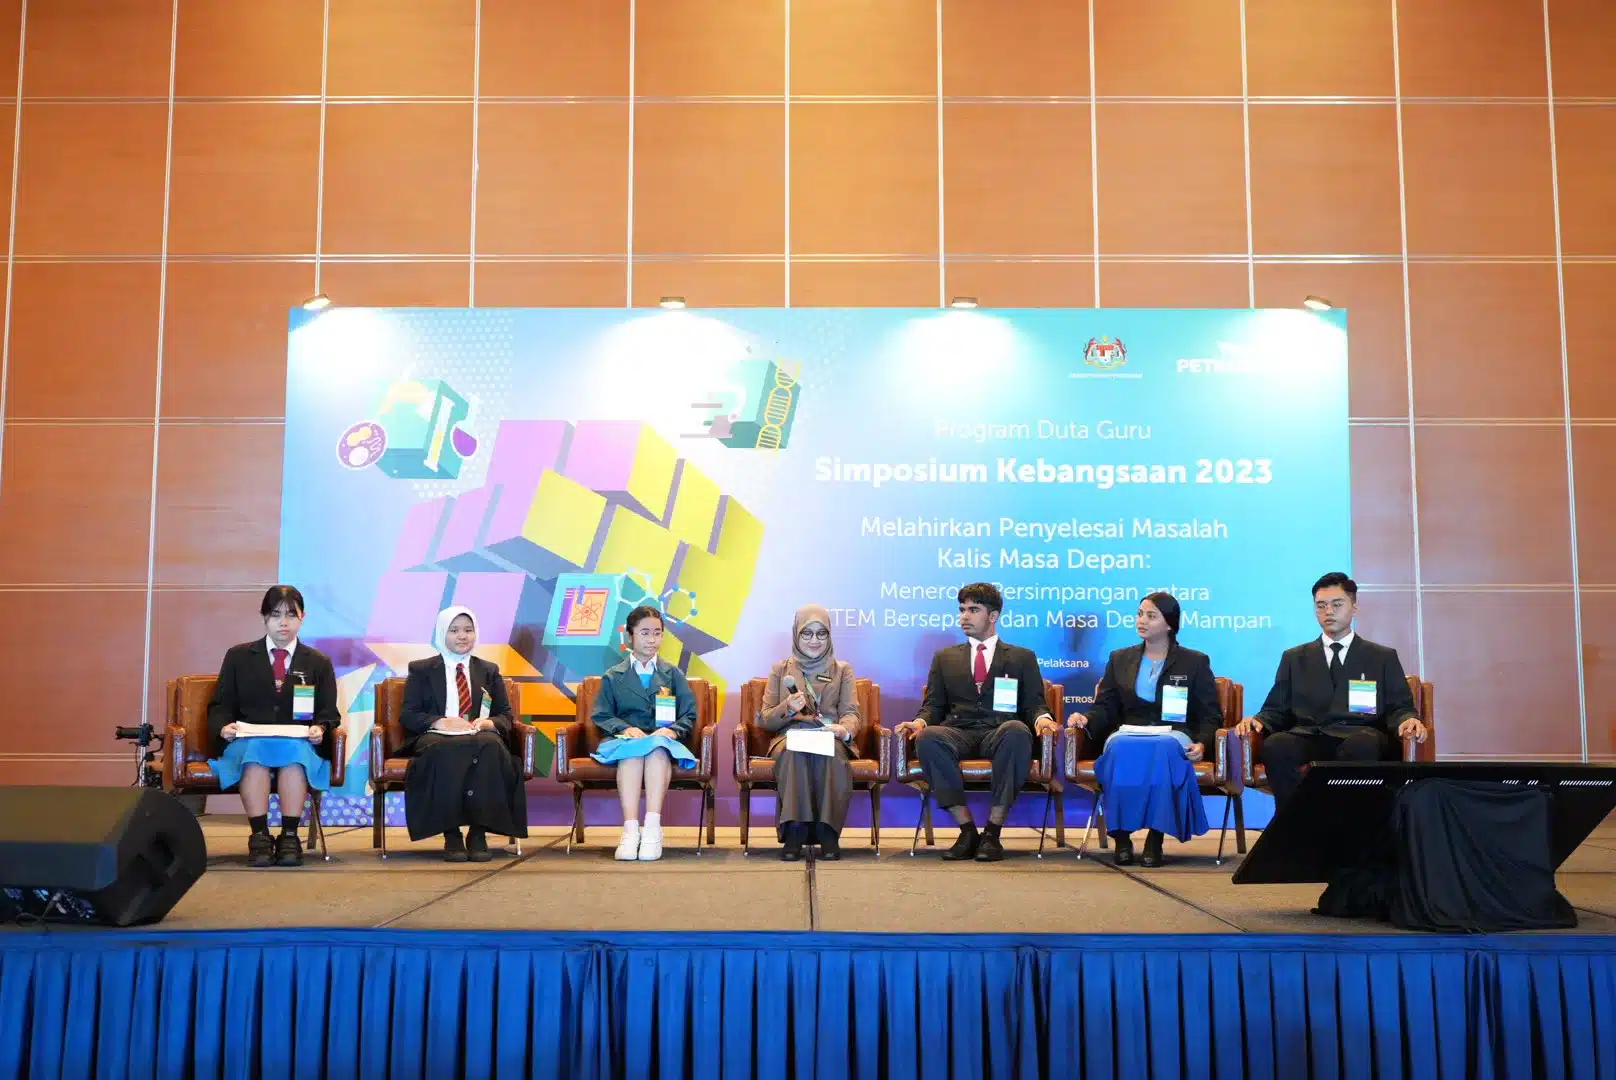 Program Duta Guru 2023 National Symposium — Building Future Proof STEM Problem Solvers